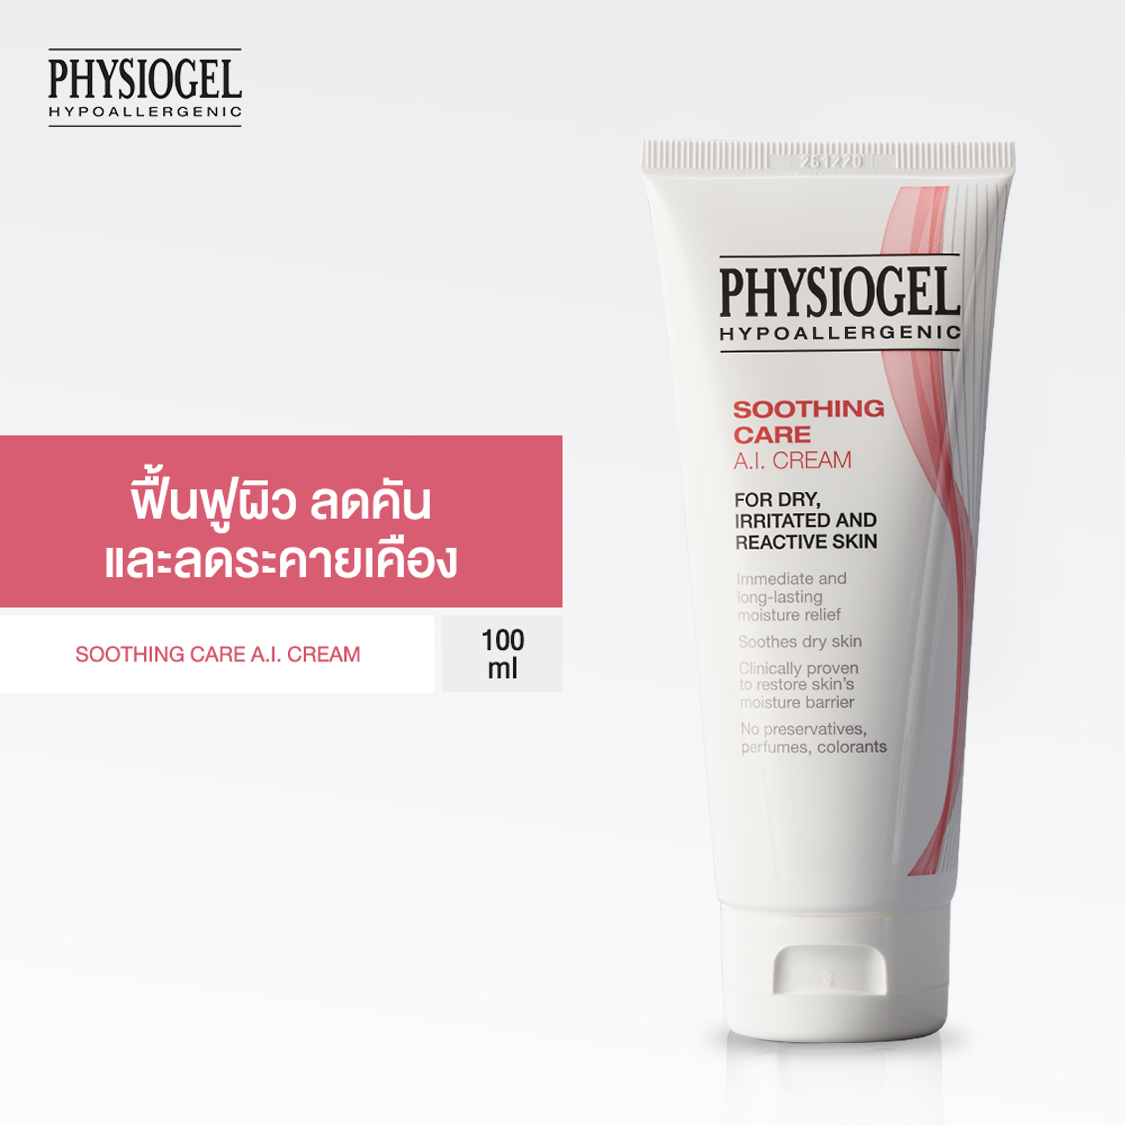 Physiogel ฟิสิโอเจล ซูธธิ่ง แคร์ เอ.ไอ. ครีม สำหรับผิวแห้งที่ไวต่อการระคายเคือง 100 มล. Physiogel Soothing Care A.I. Cream for Dry, Irritated, Sensitive Skin, 100ml